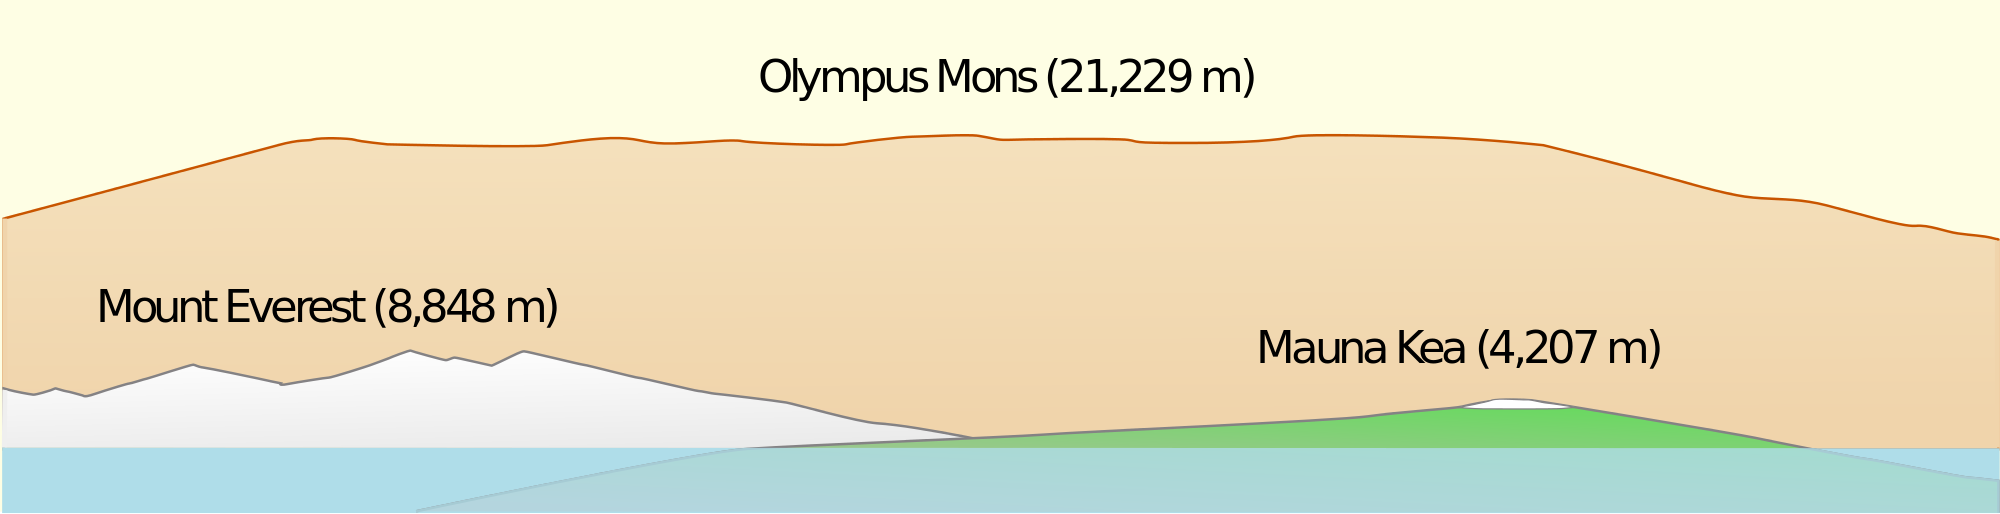 Mount Olympus svg #20, Download drawings